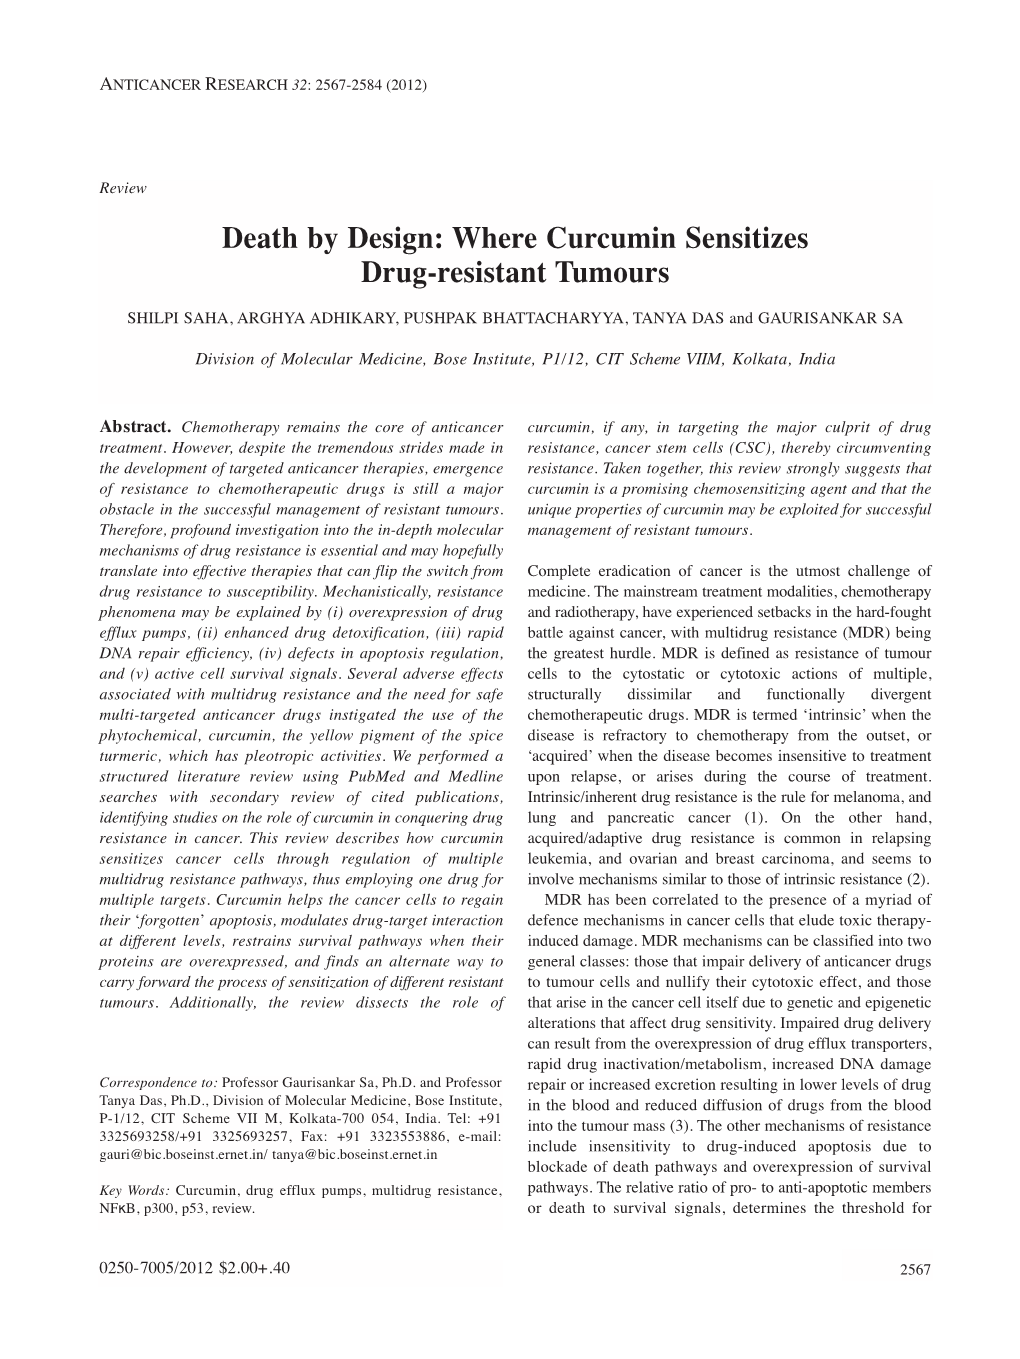 Death by Design: Where Curcumin Sensitizes Drug-Resistant Tumours